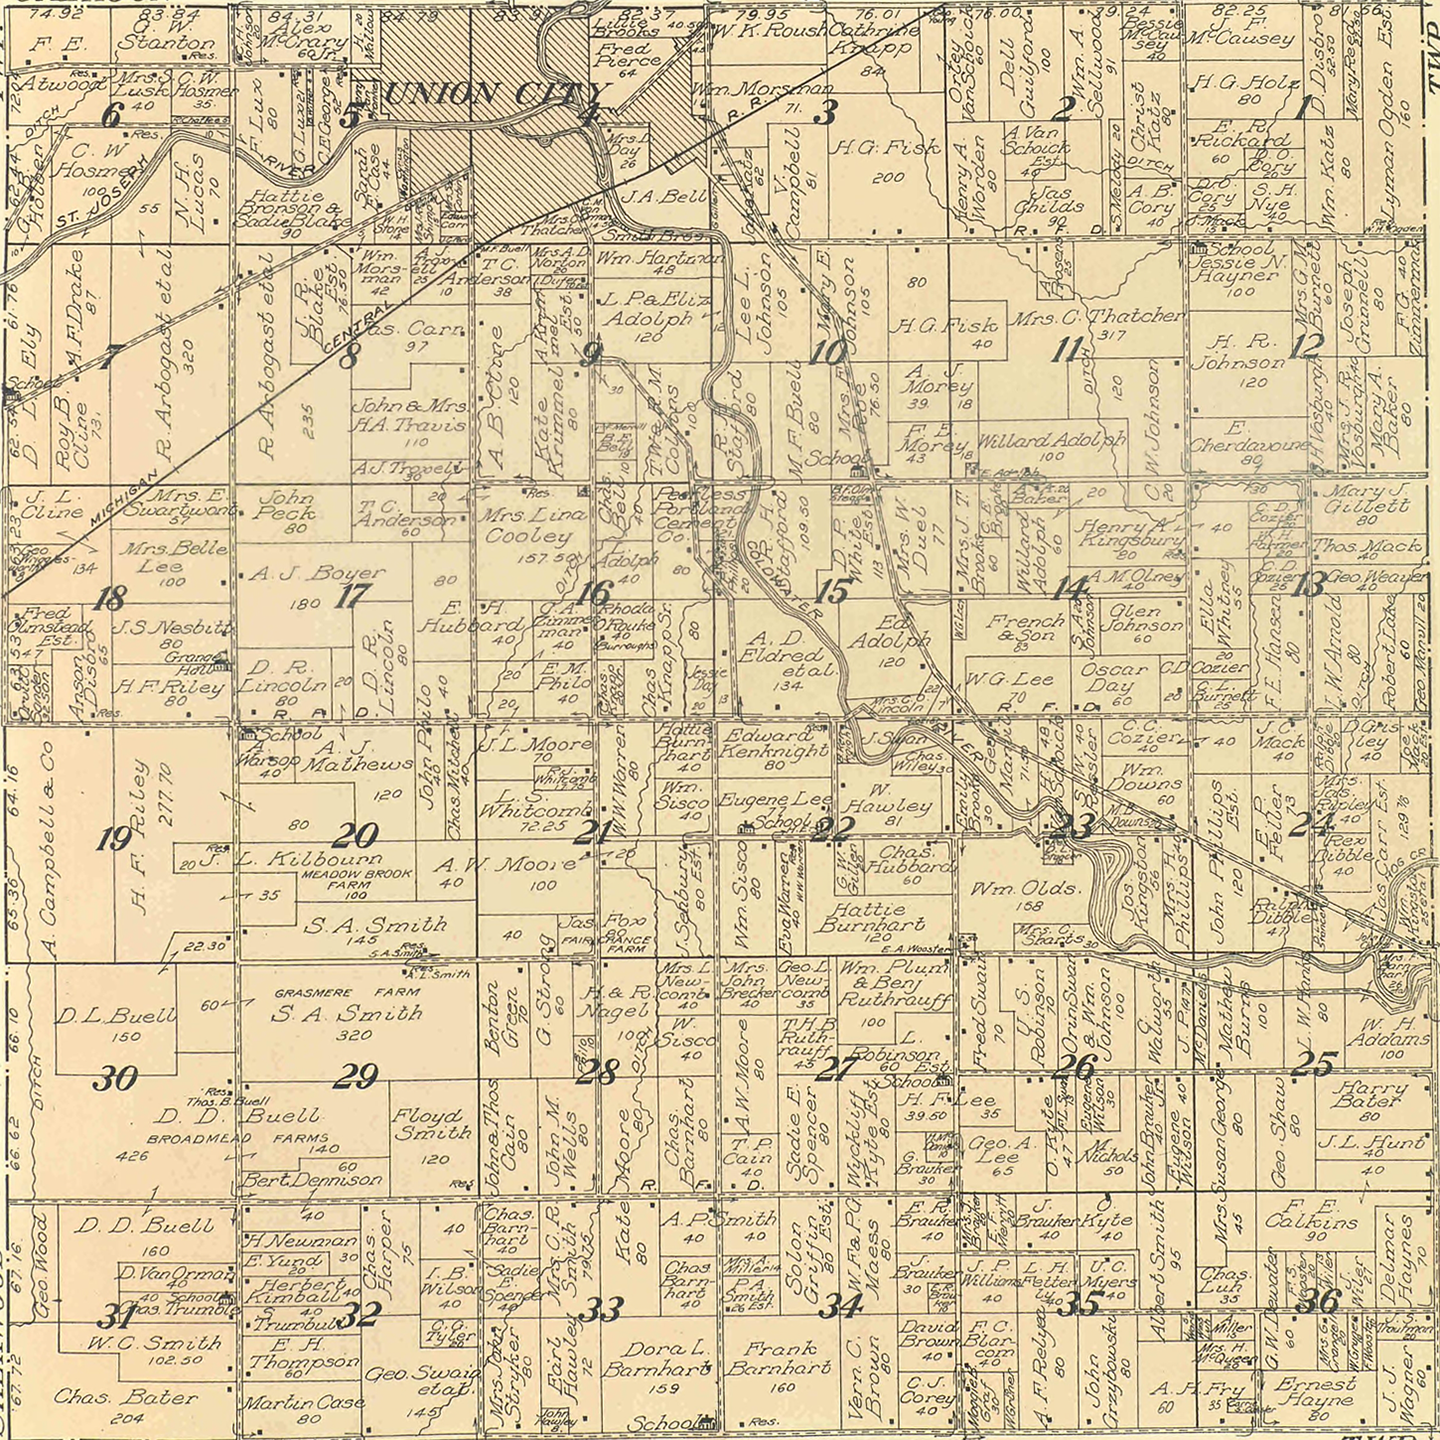 1915 Union Township, Michigan landownership map